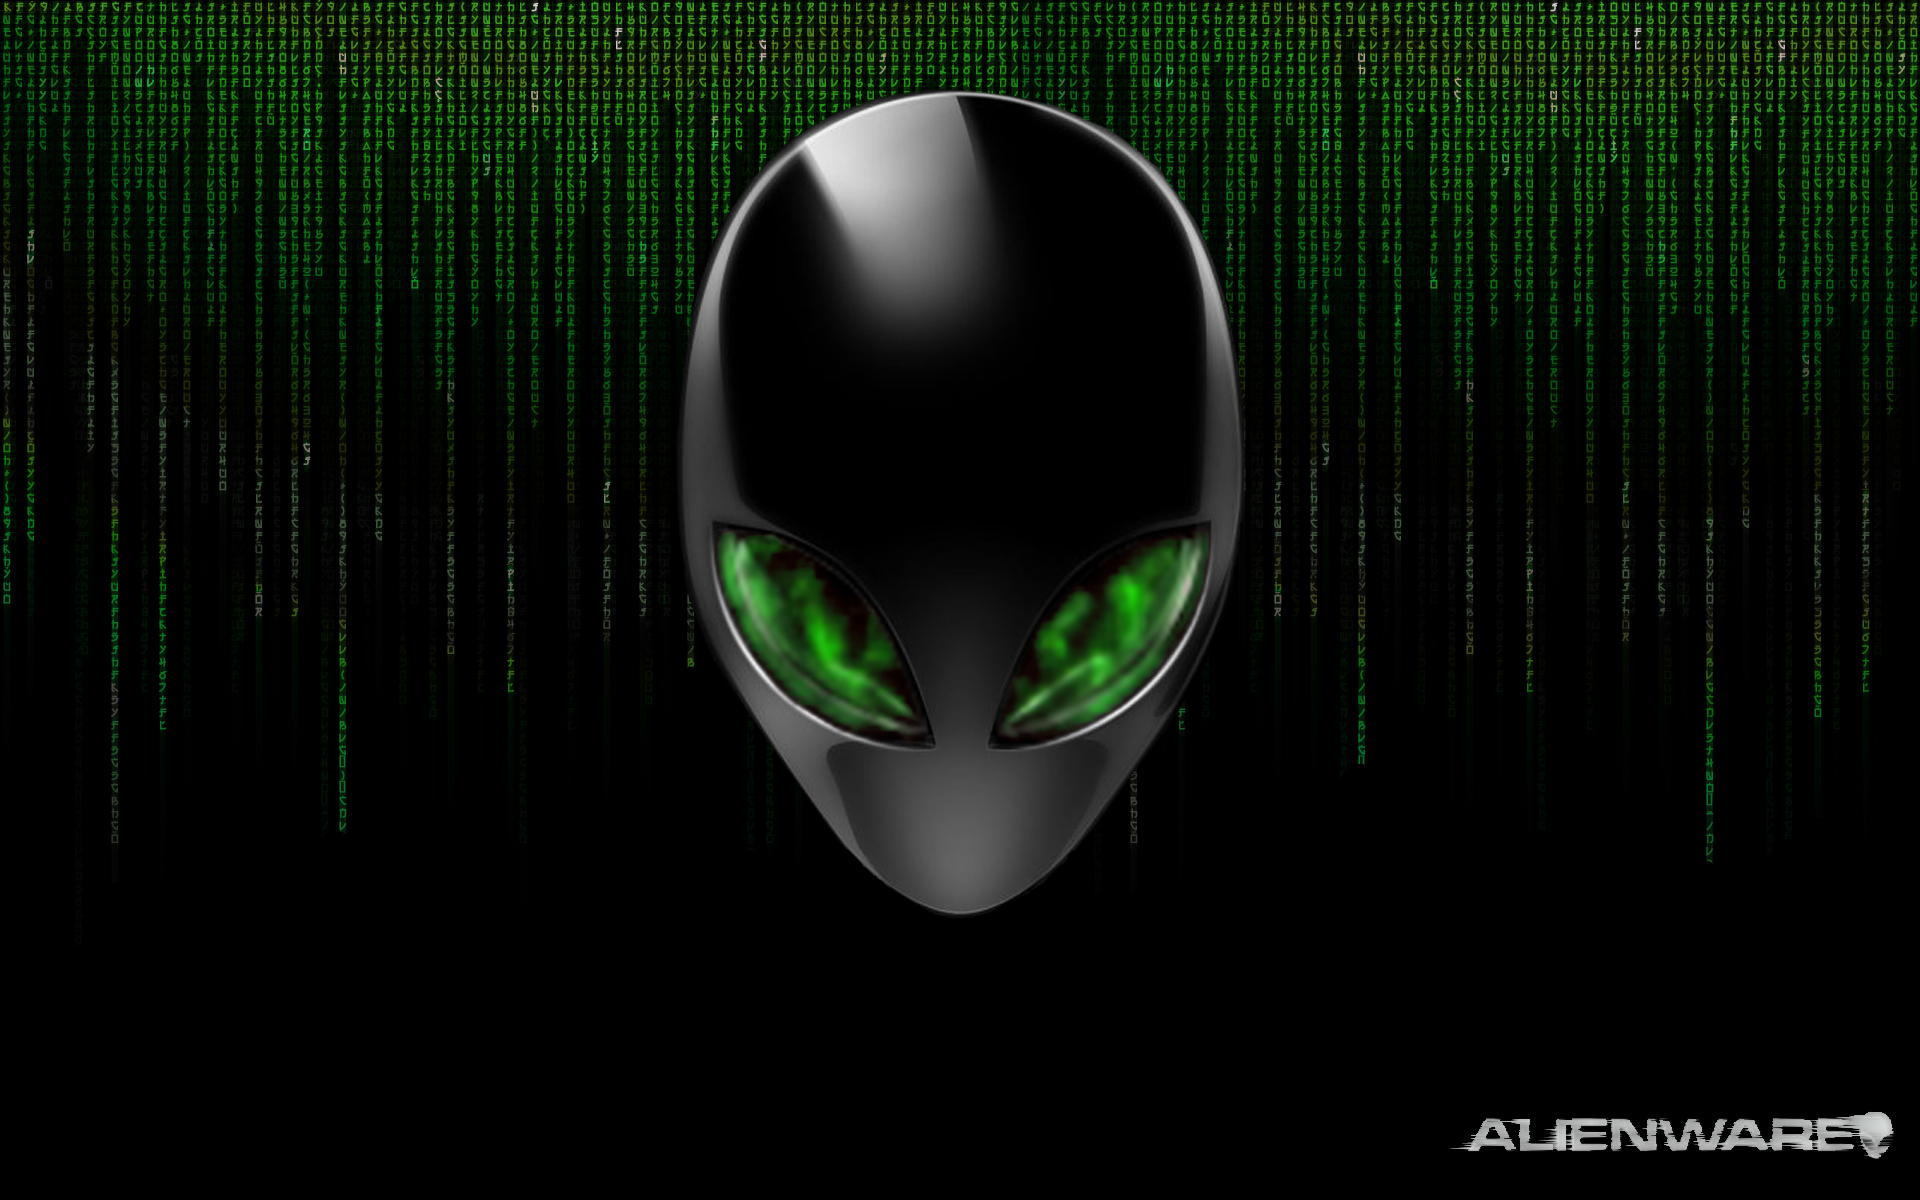 Wallpaper download alienware green desktop wallpaper in hd